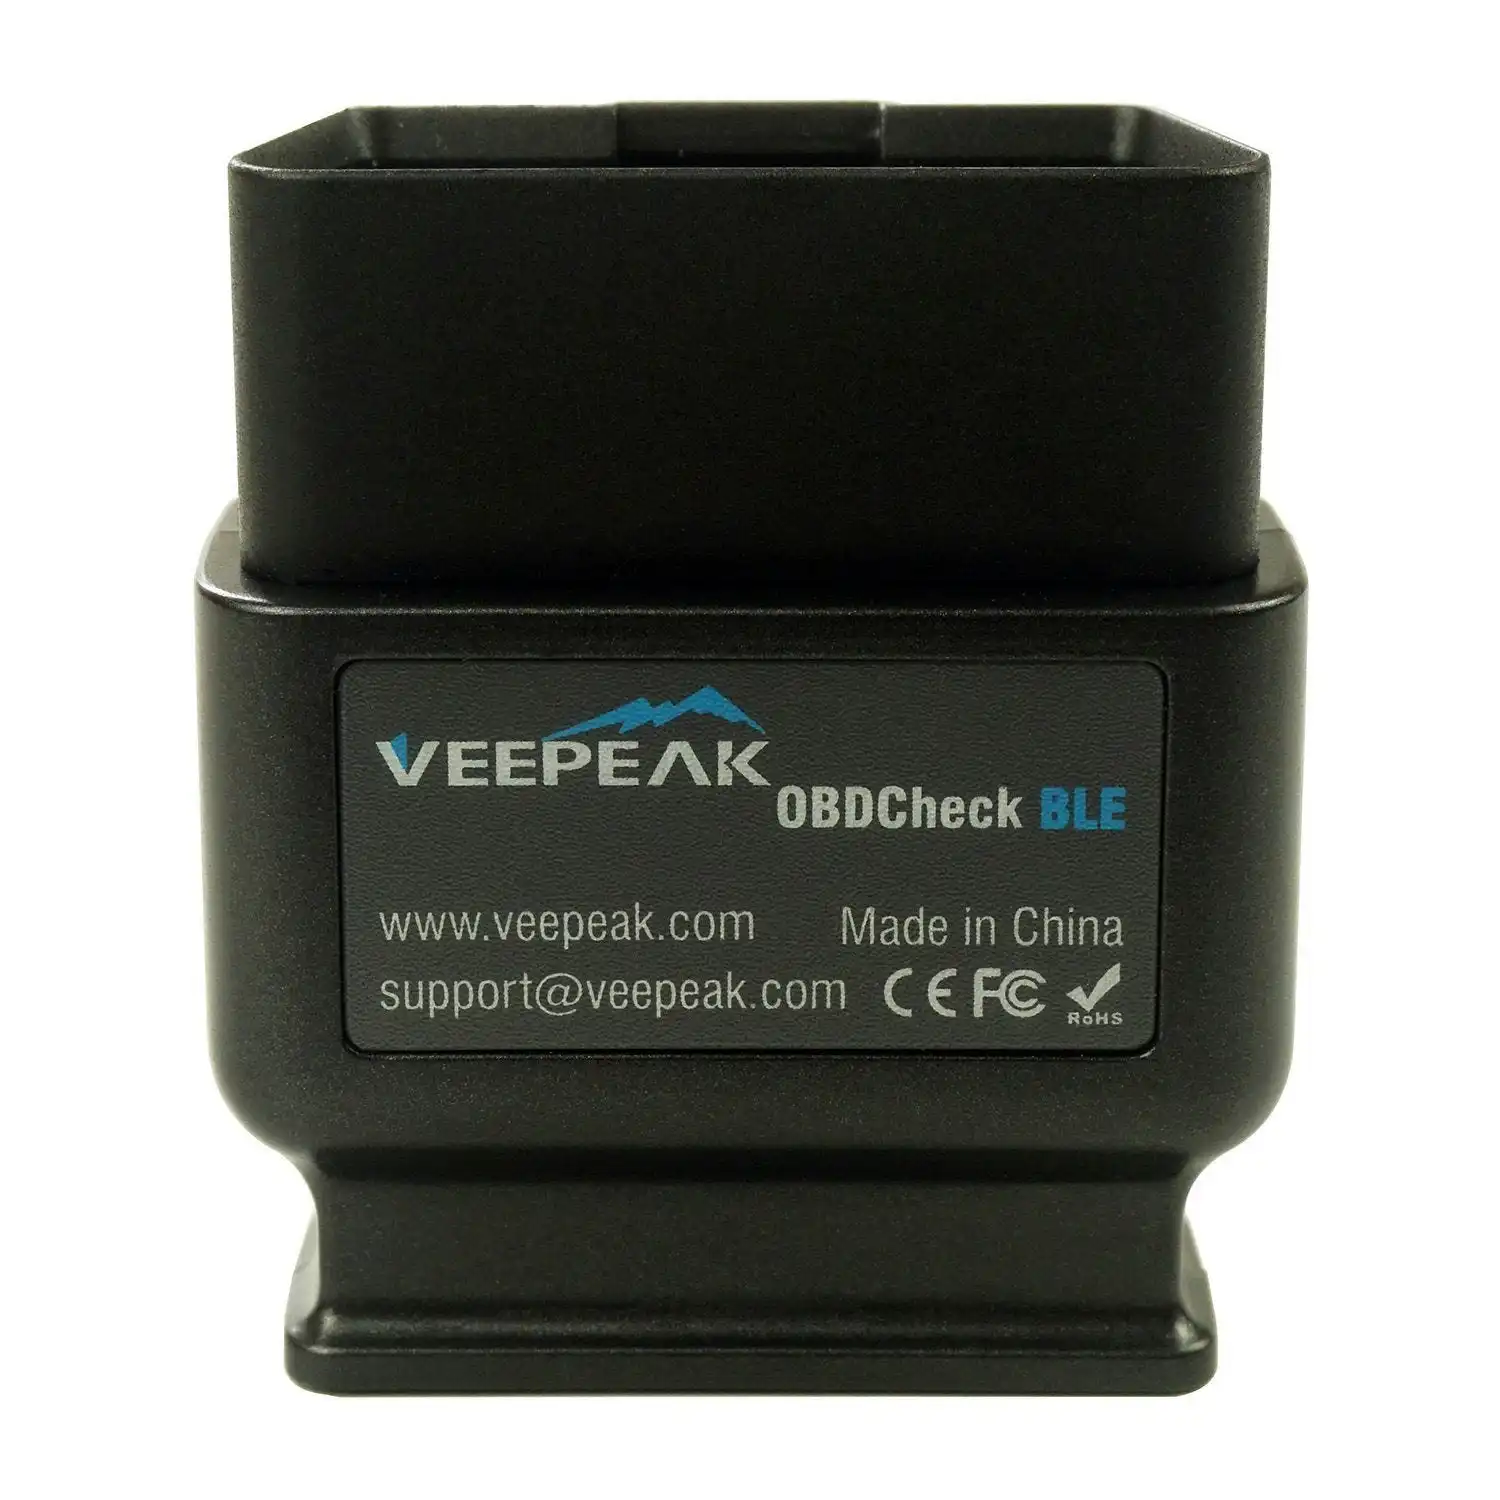 Veepeak OBDCheck BLE Bluetooth 4.0 OBD2 Scanner Auto Diagnostic Tool